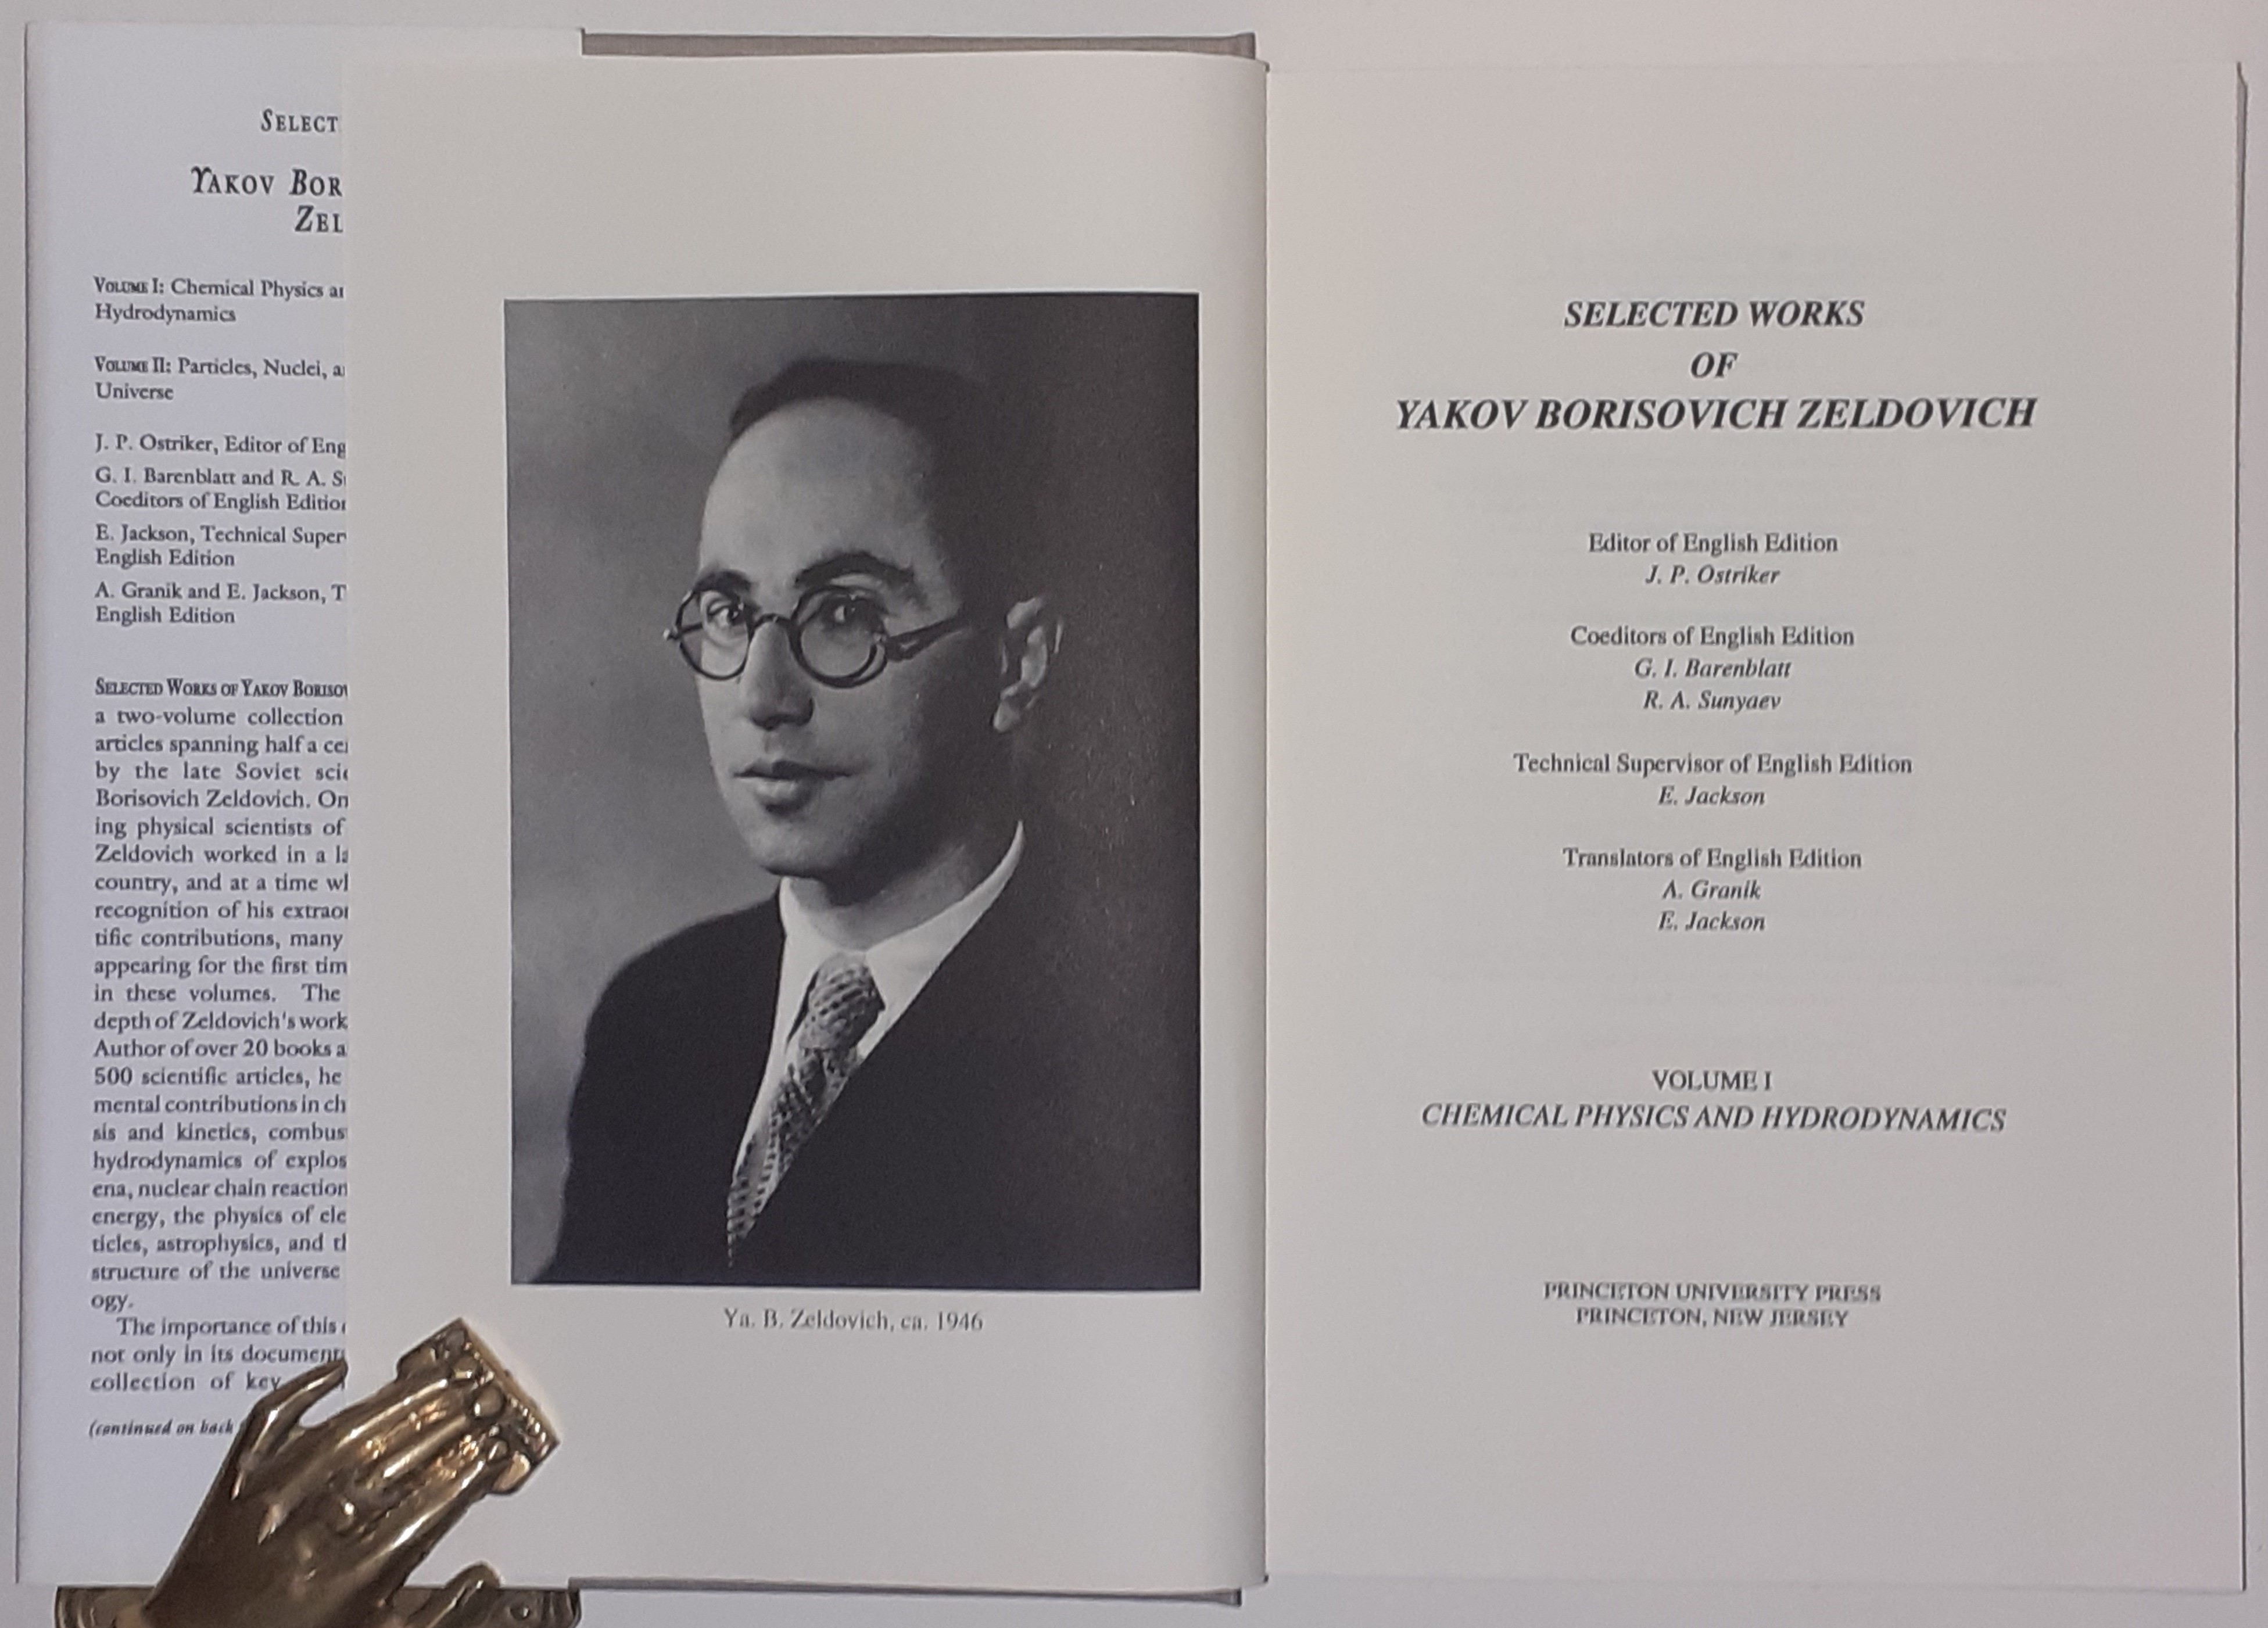 Selected Works of Yakov Borisovich Zeldovich. Volume I: Chemical Physics and Hydrodynamics. Editor of English Edition: J.P.Ostriker. G.I.Barenblatt and R.A.Sunyaev, Coeditors. par ZELDOVICH, Yakov Borisovich:: (1992) | Antiquariat Bibliomania